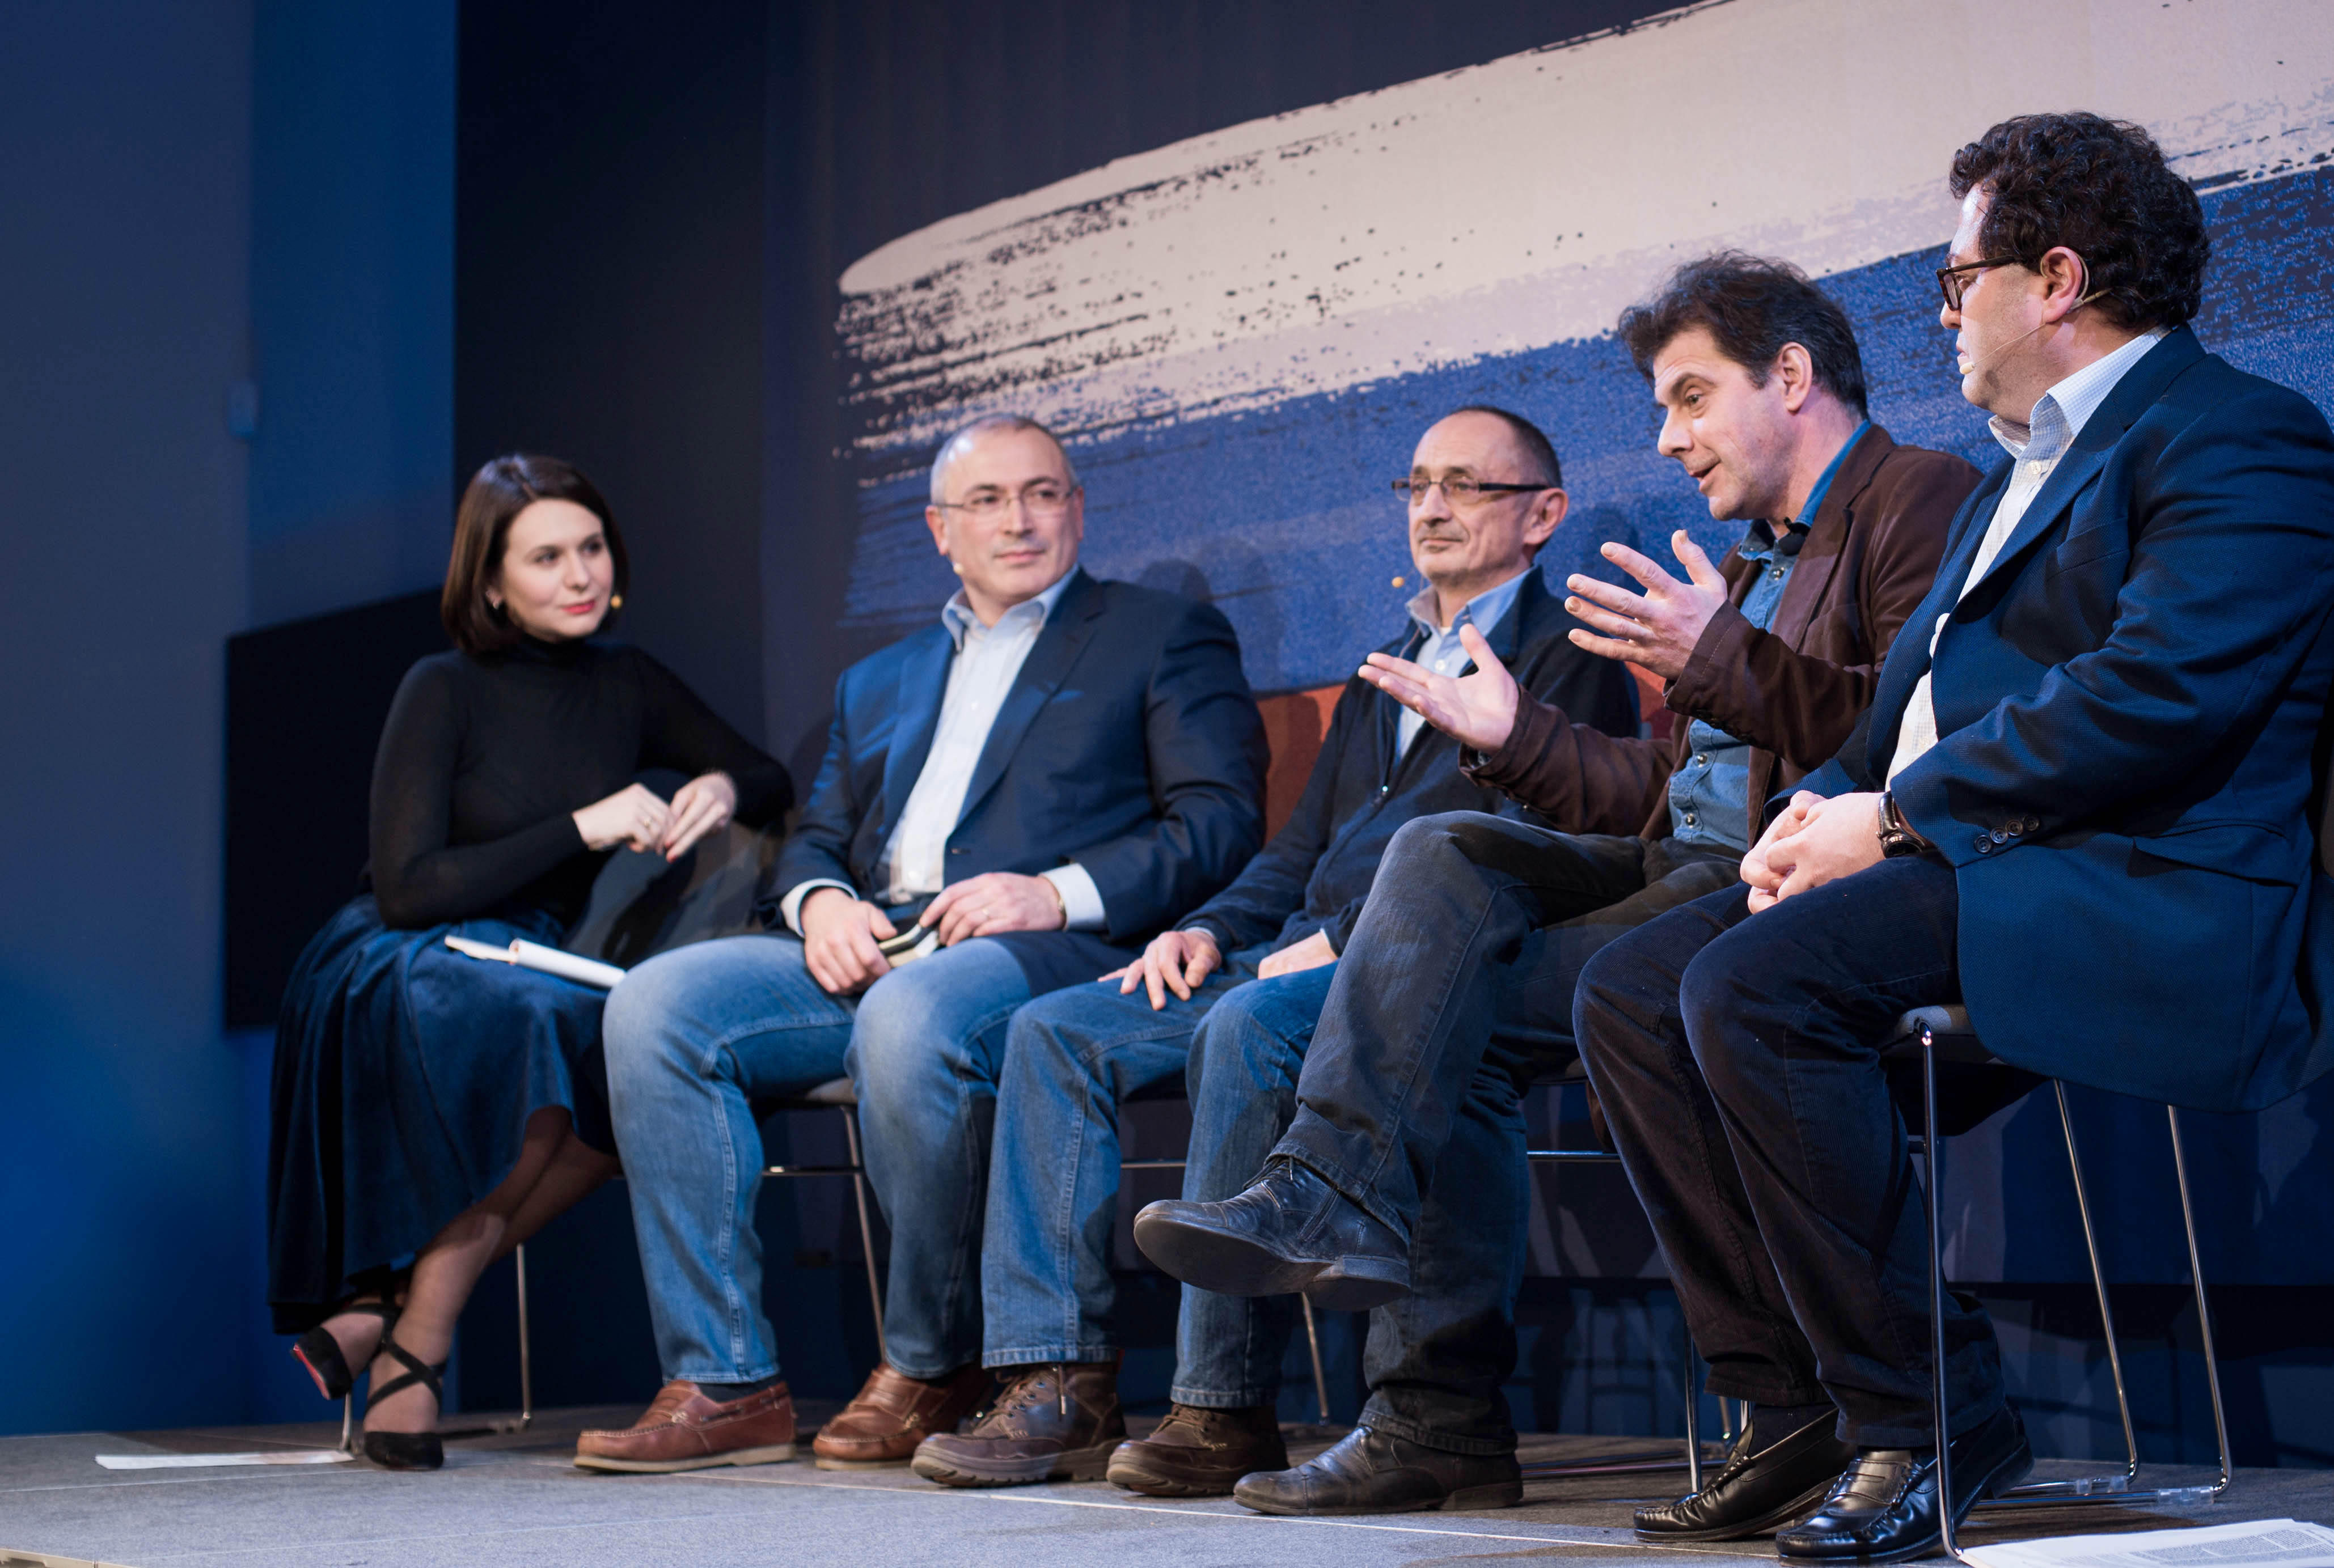 Elena Servettaz with panel, including Mikhail Khodorkovsky (second from left).